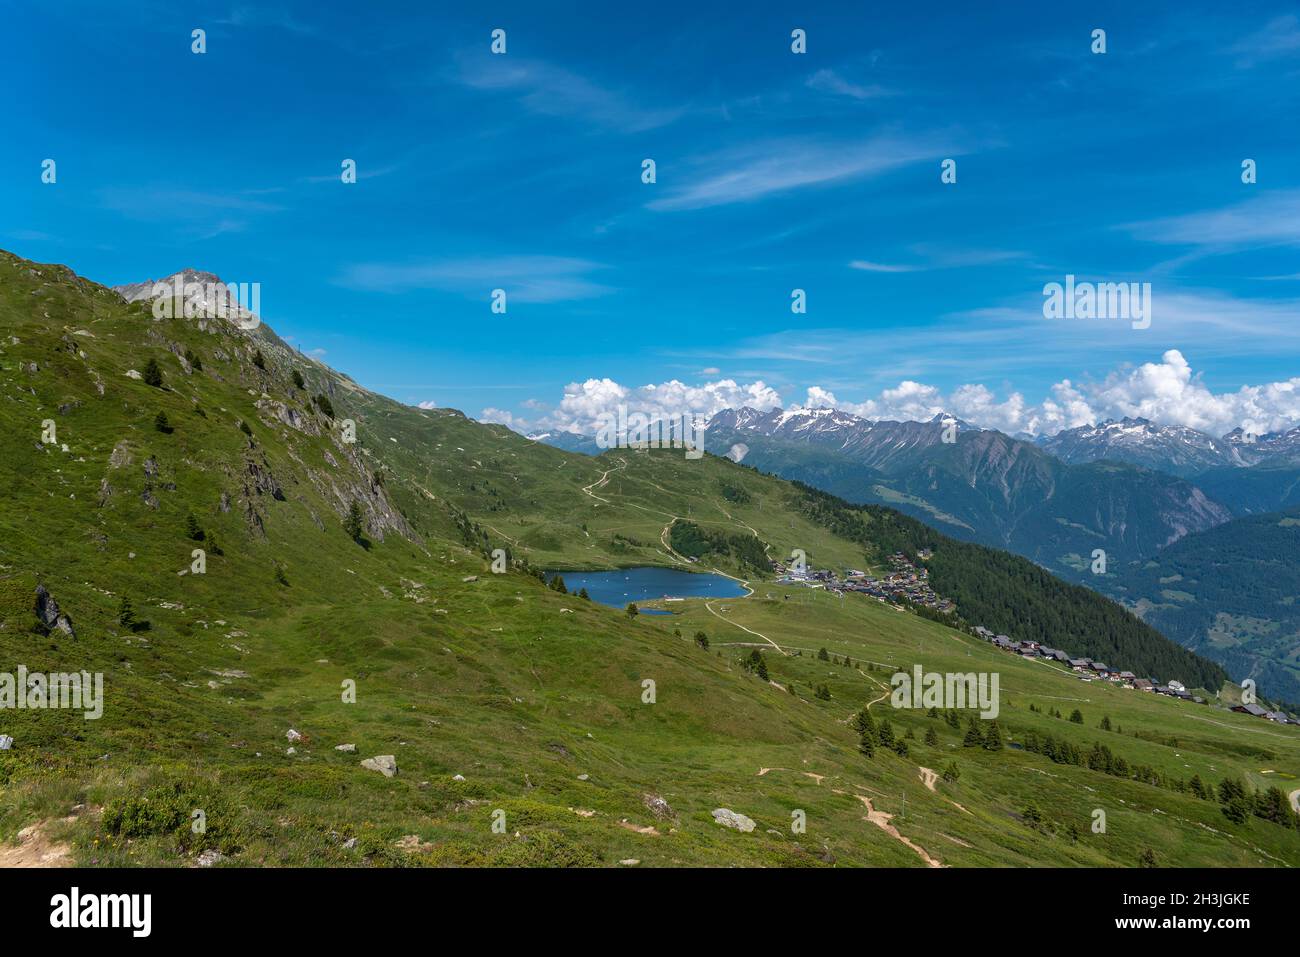 Landscape with the Bettmerhorn mountain and Lake Bettmersee, Bettmeralp, Valais, Switzerland, Europe Stock Photo